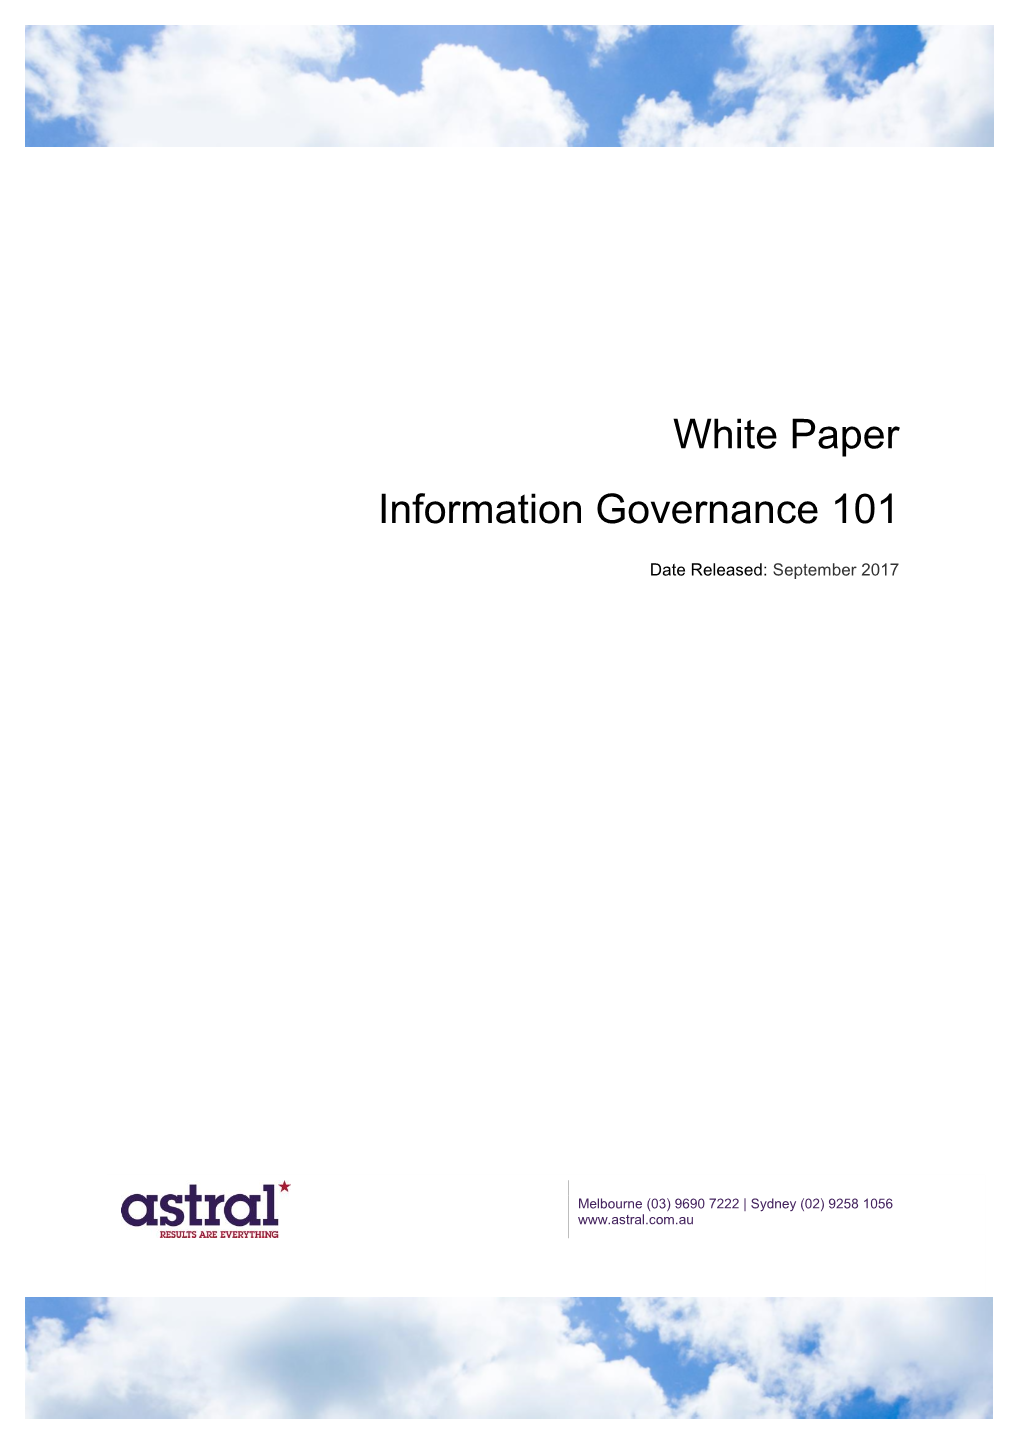 White Paper Information Governance 101